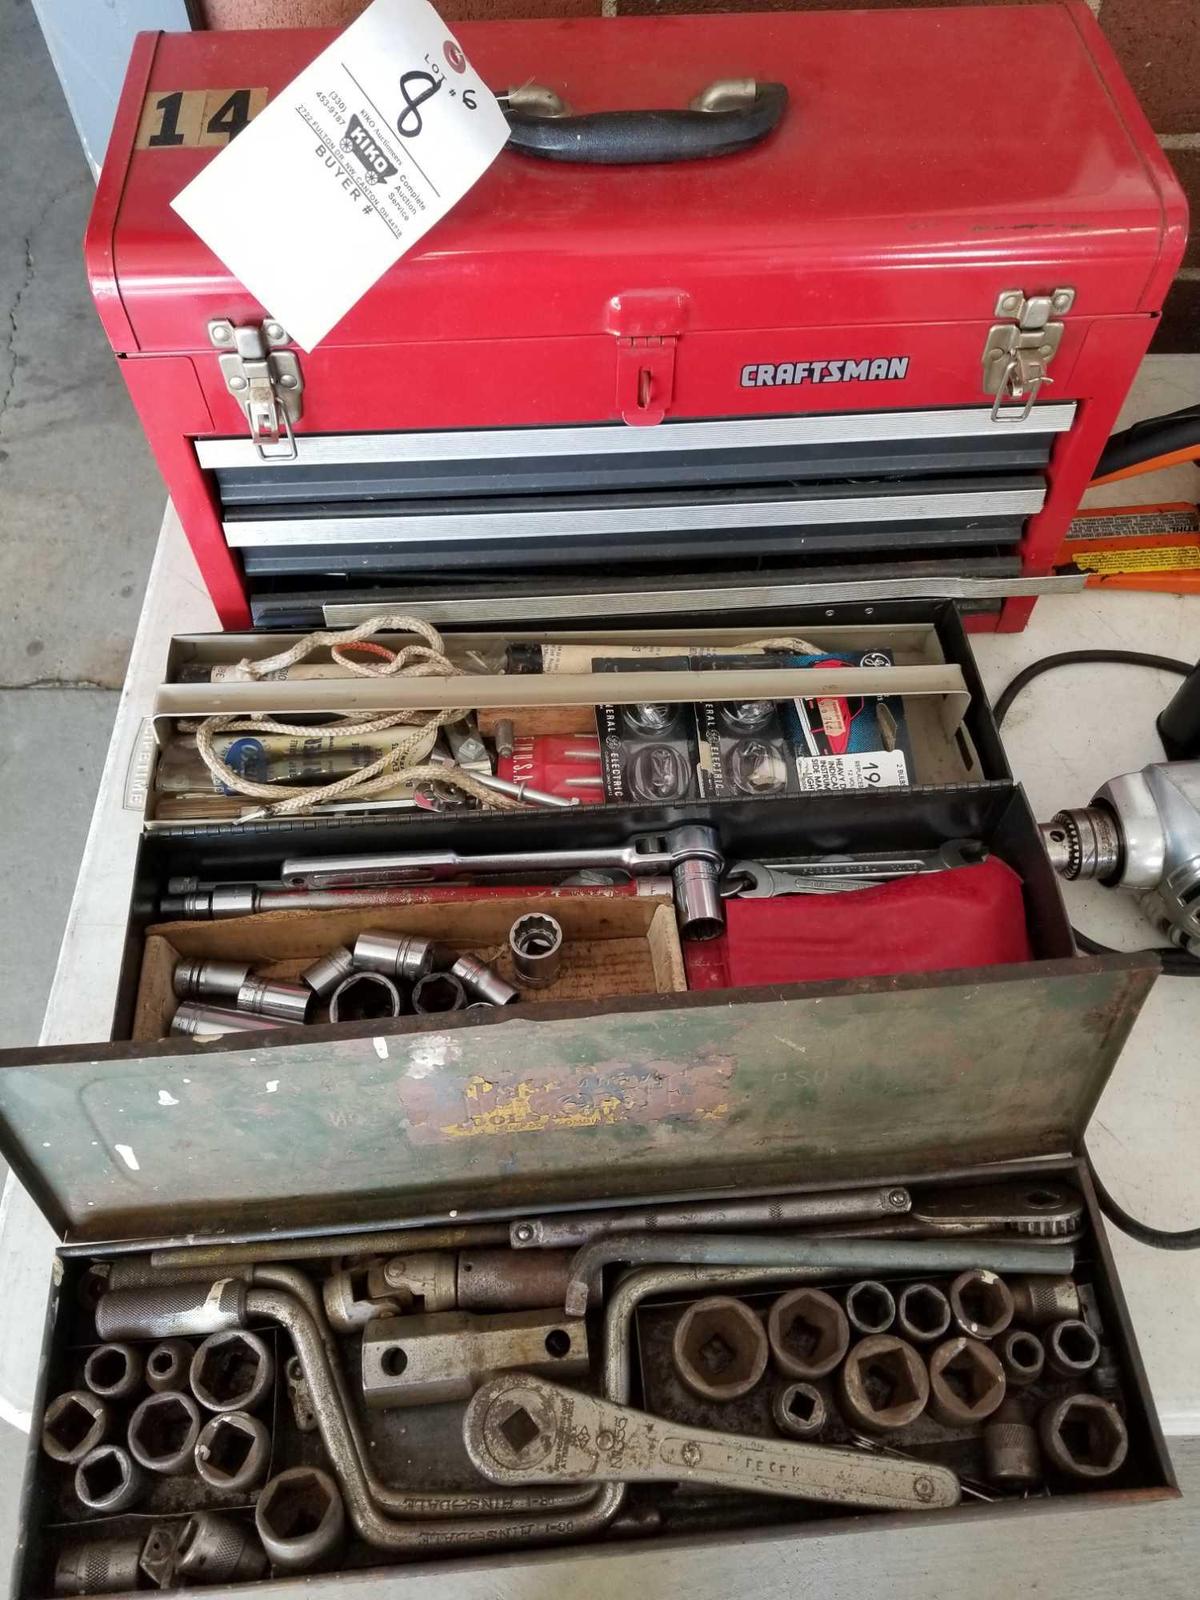 Craftsman toolbox, socket sets